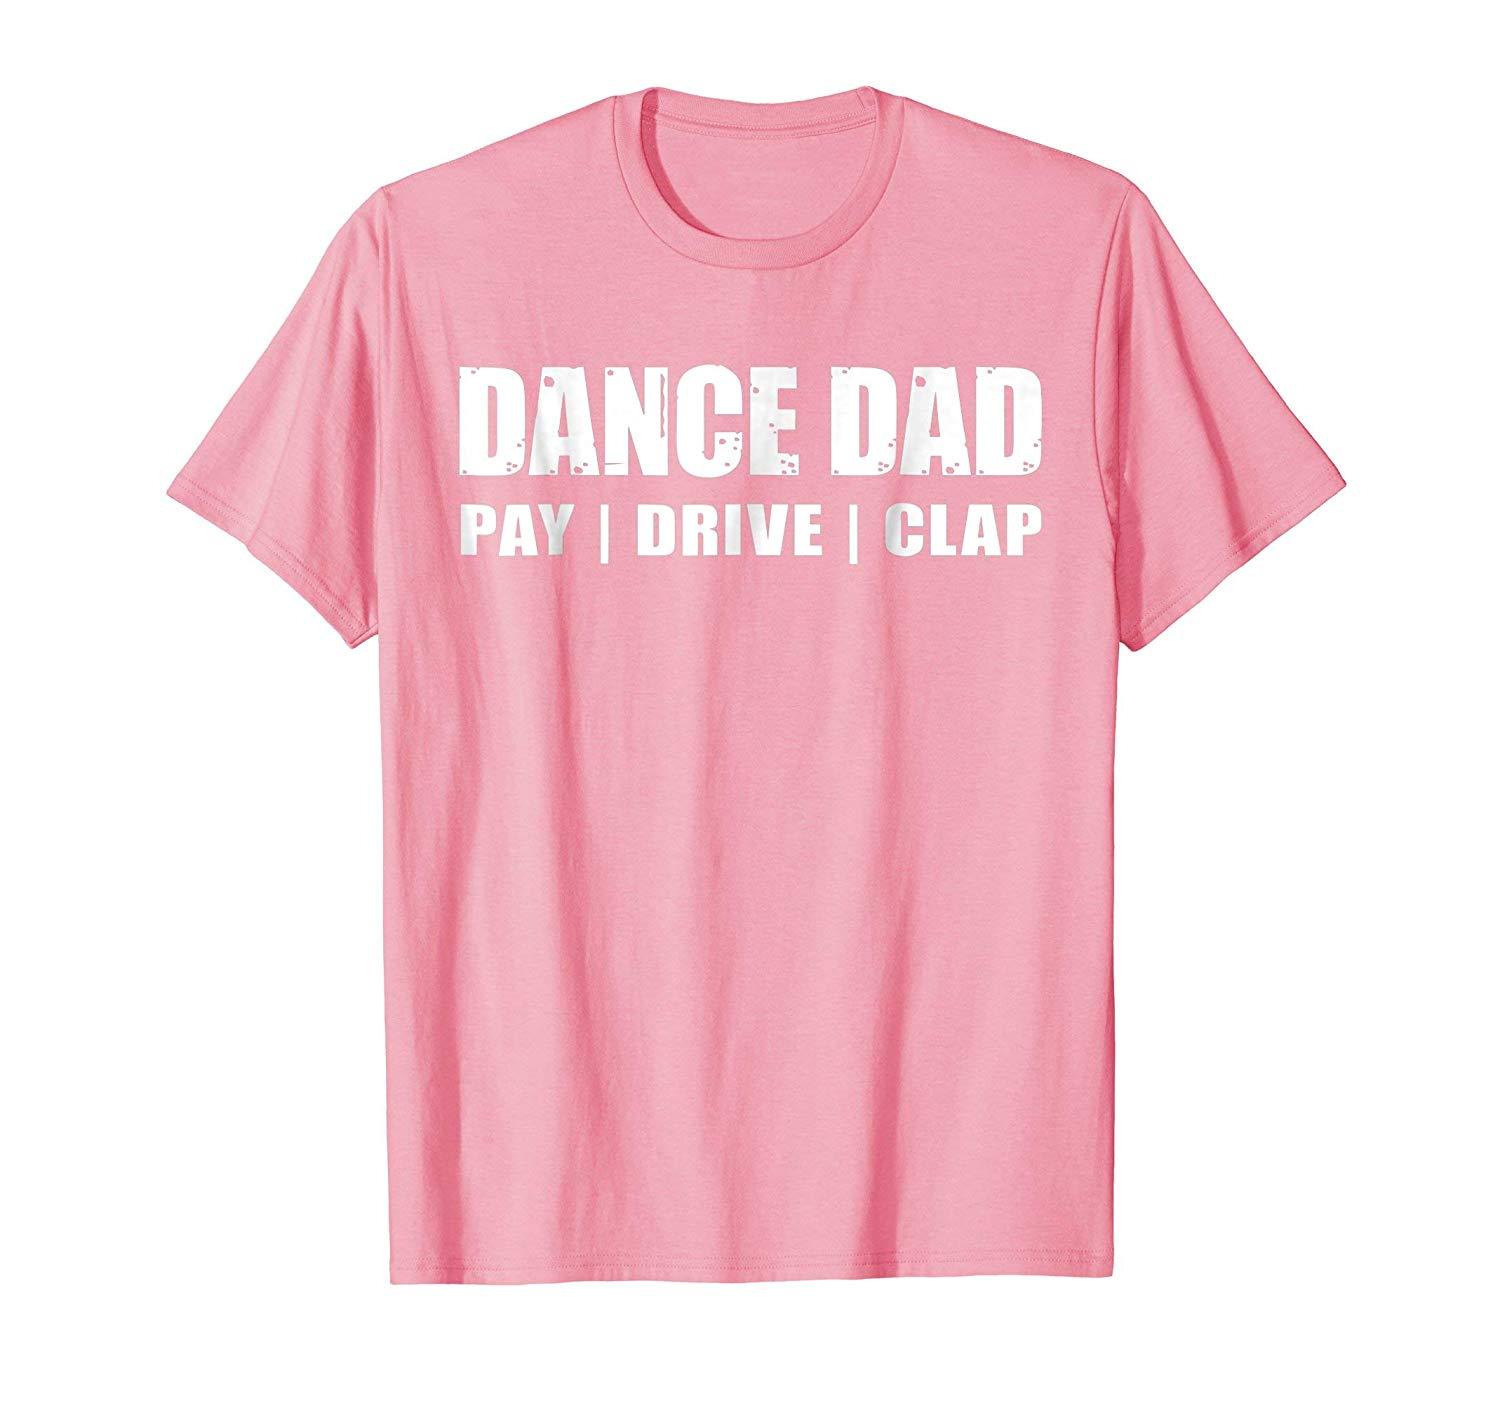 Funny Shirt - DANCE DAD SHIRT Dancing Recital Pay Drive Clap Funny ...